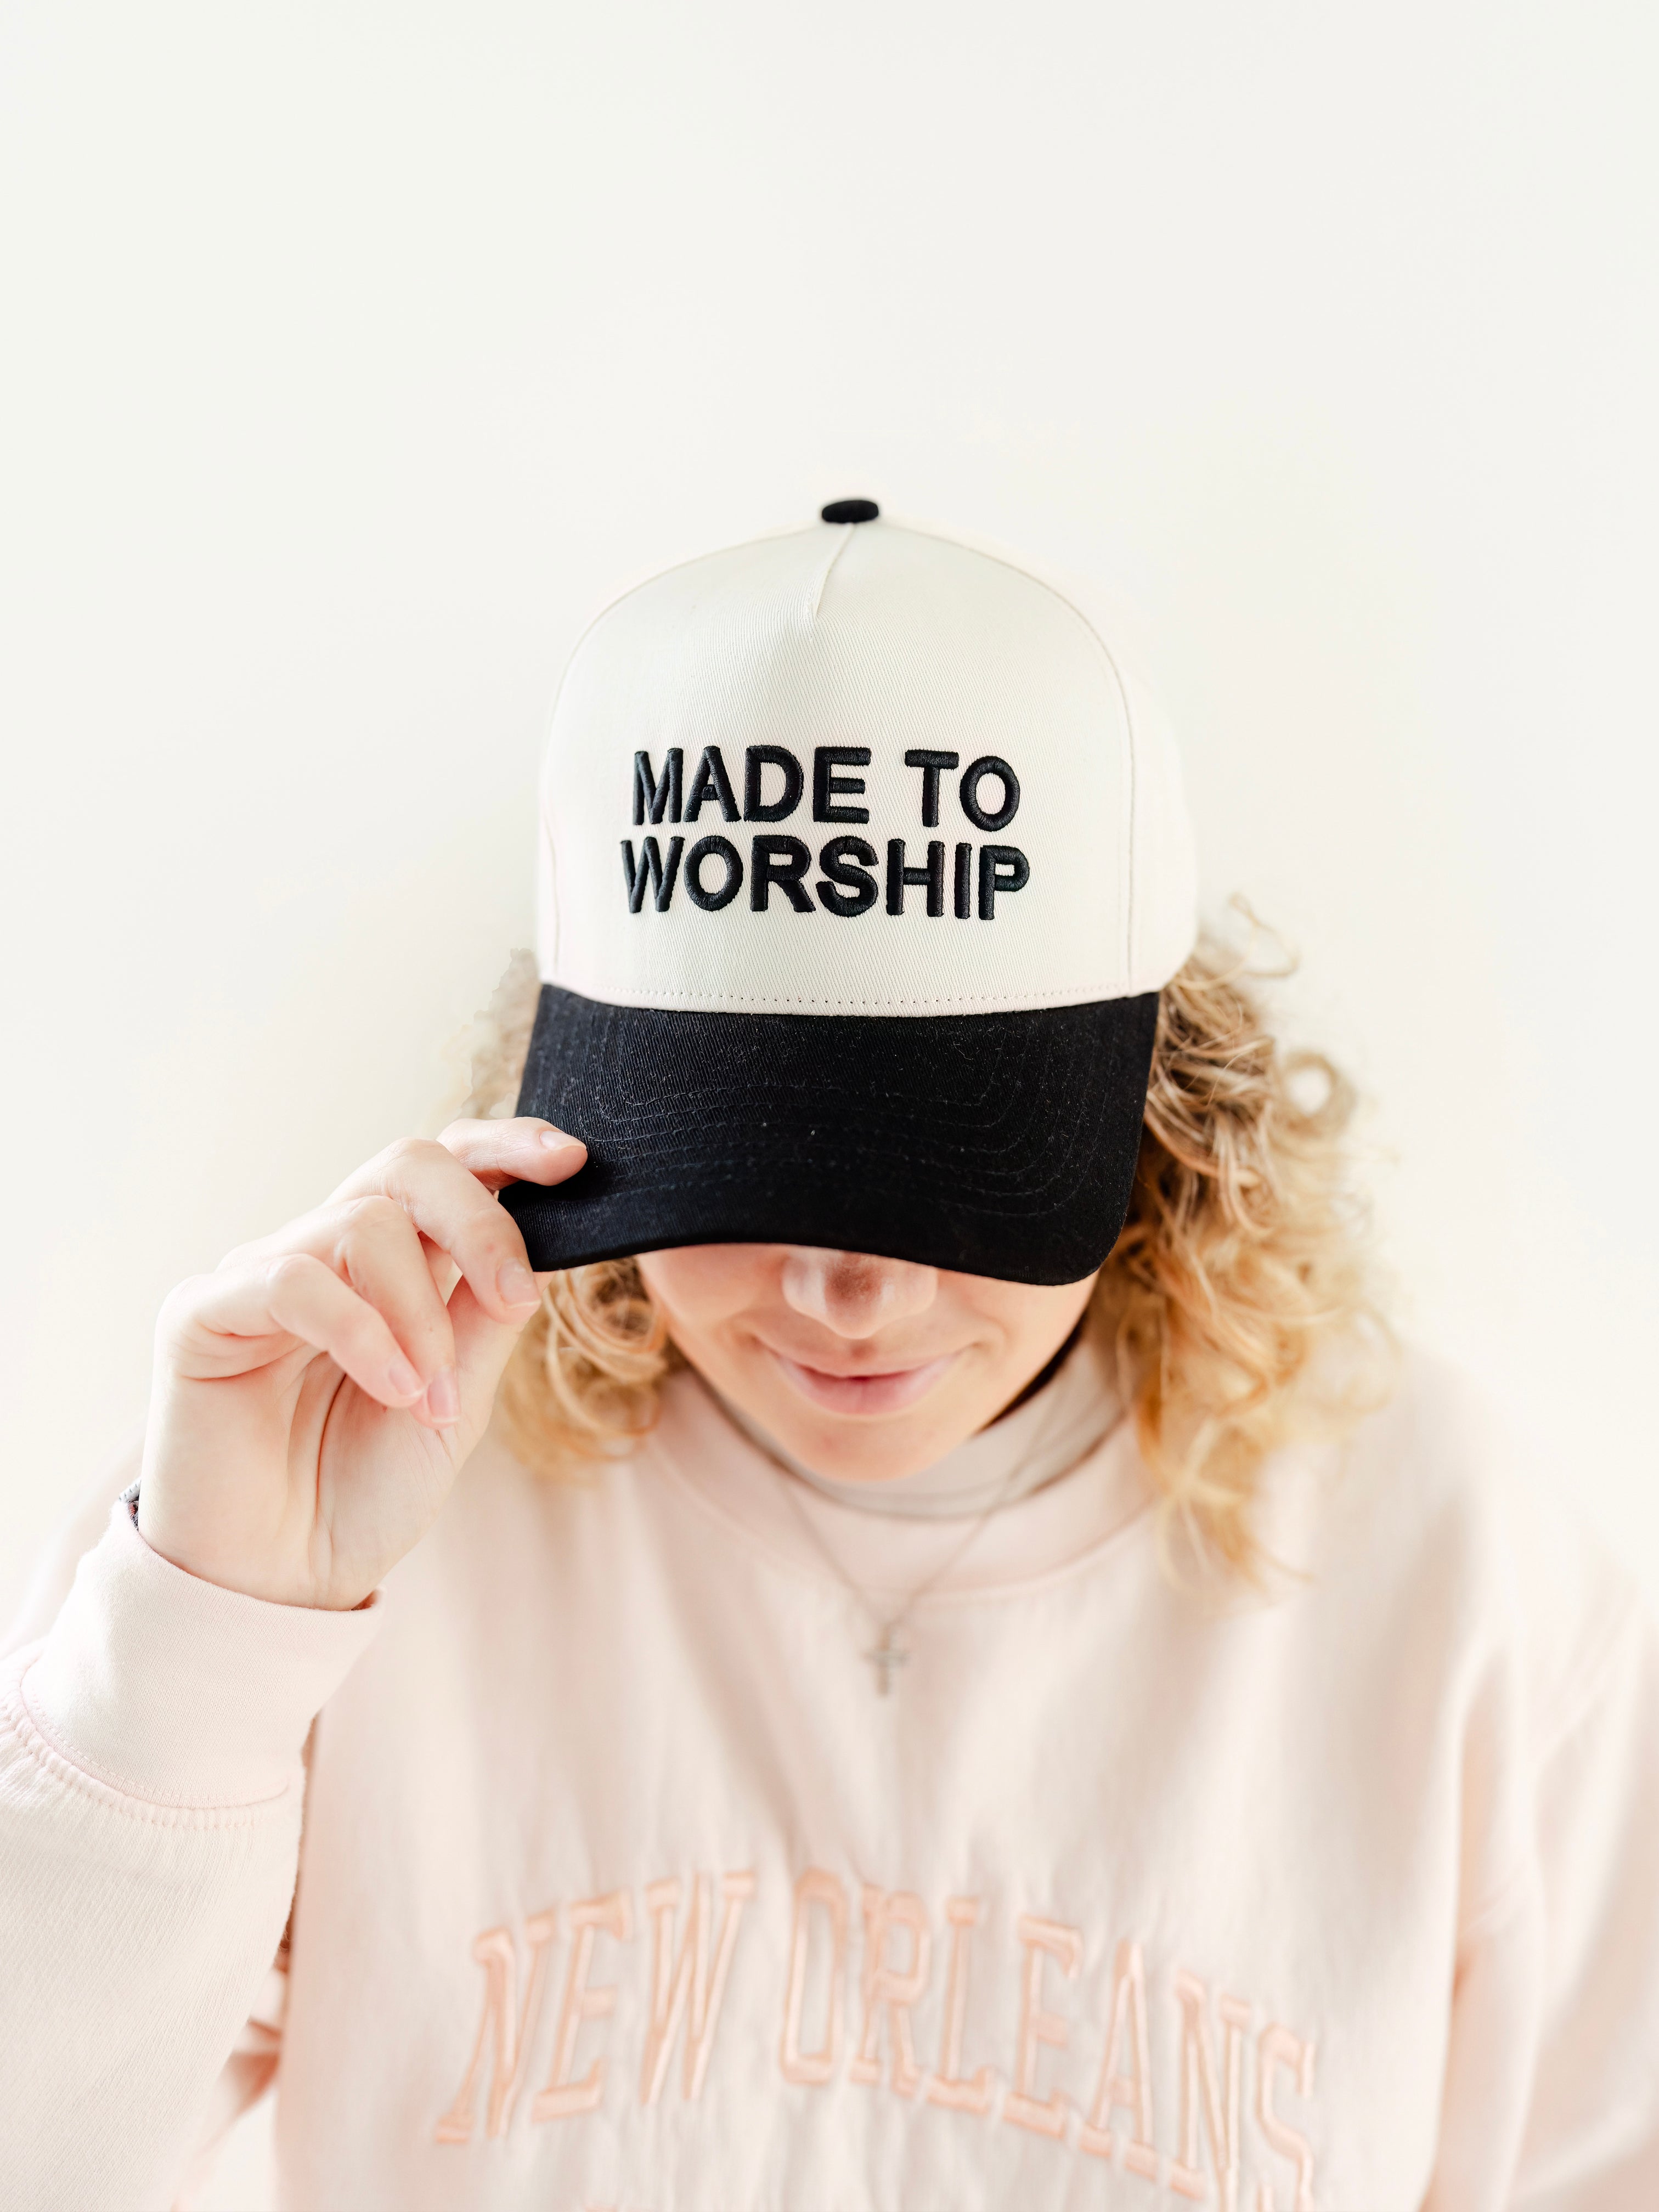 Hat: Made to worship